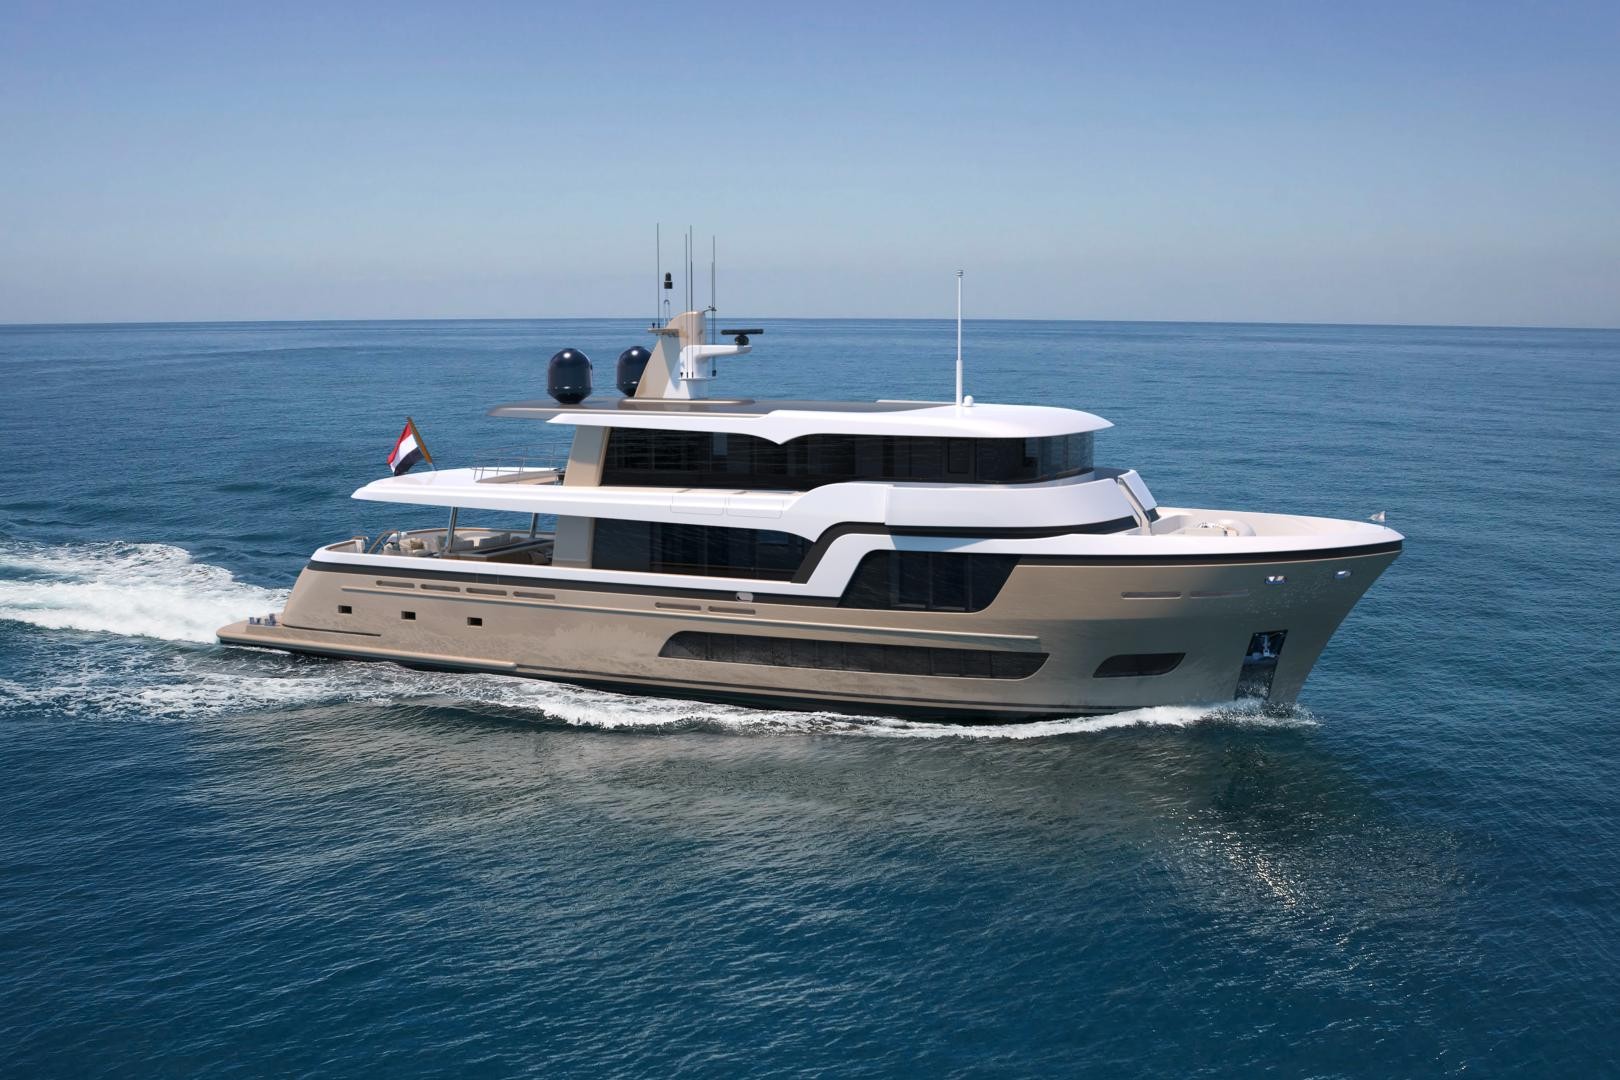 Van der Valk's 34m explorer motor yacht Lady Lene launched